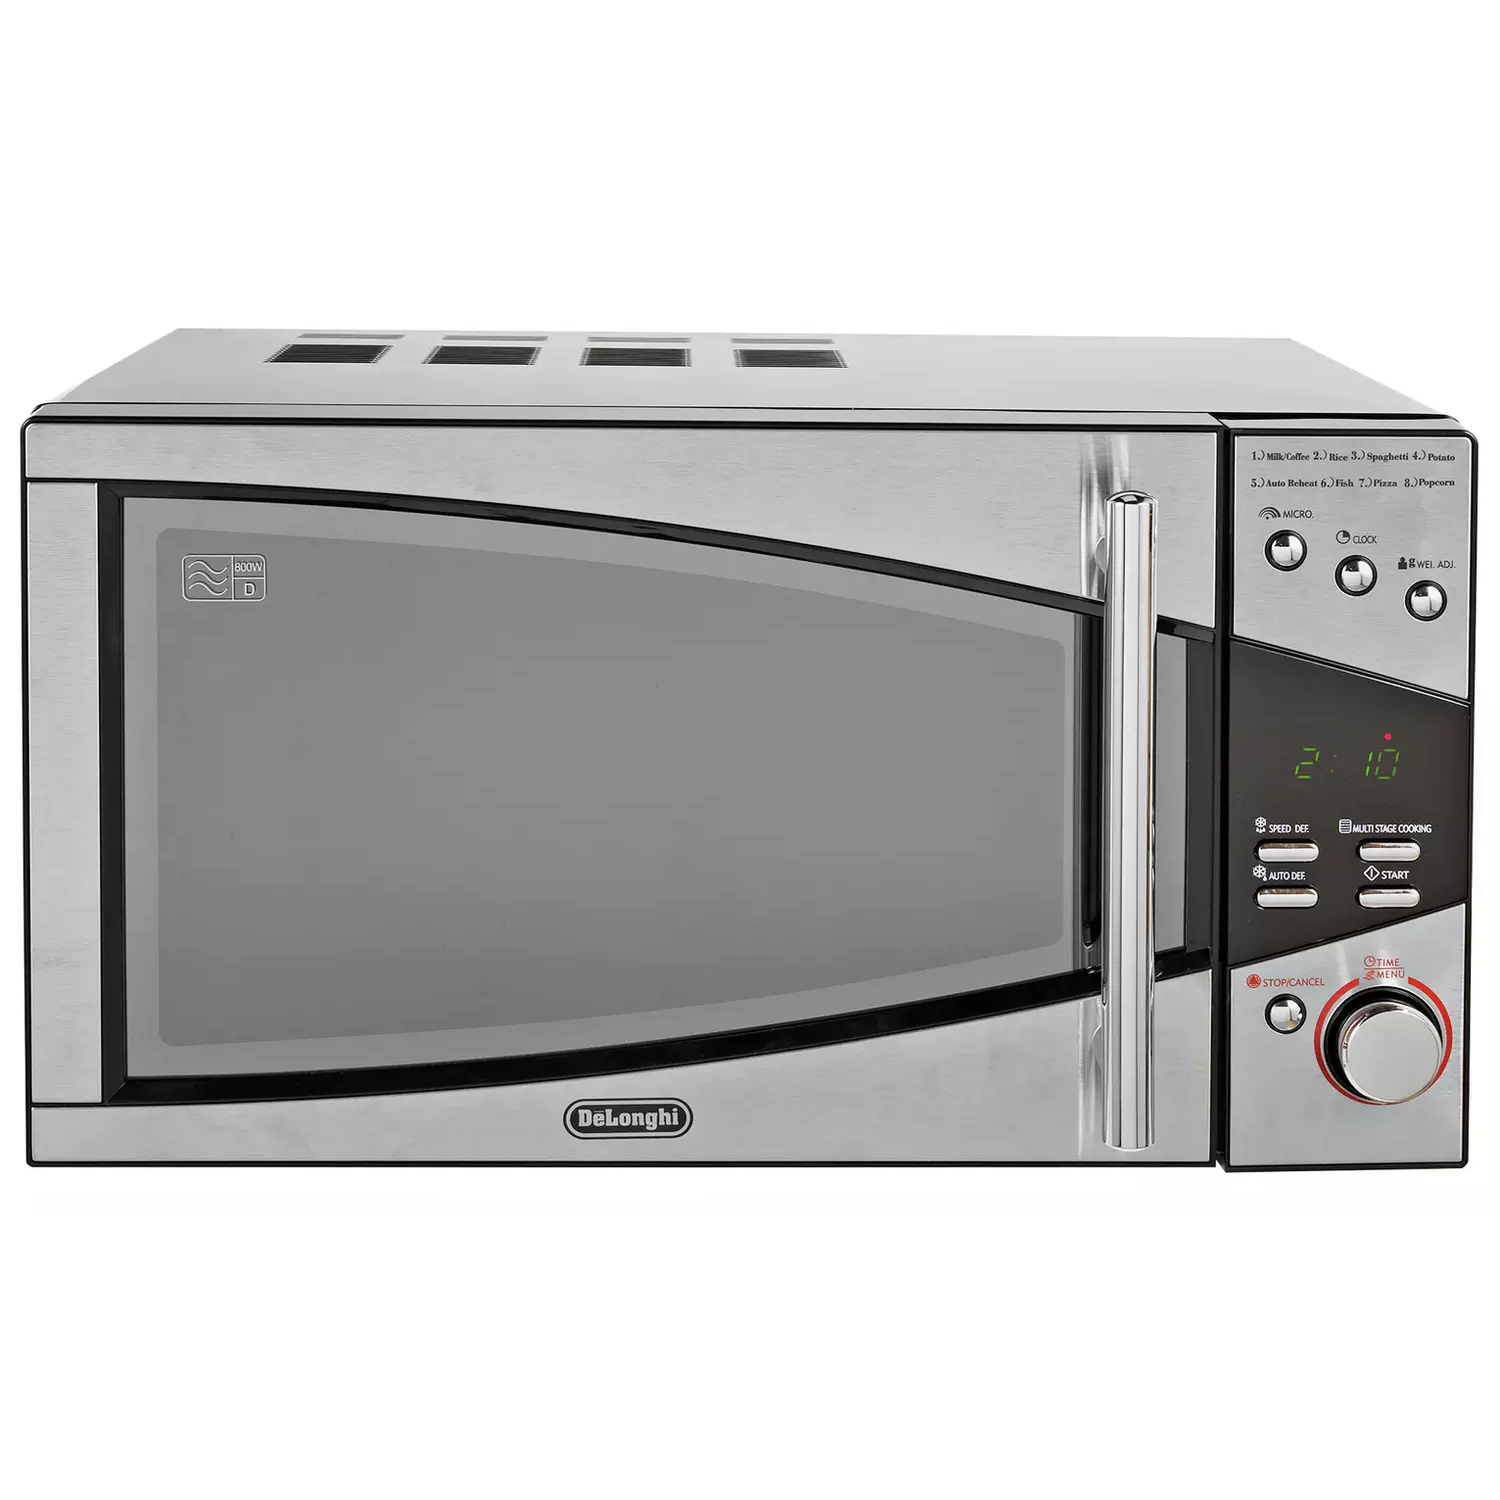 De’Longhi 800W Standard Microwave P80T5A – Black and Silver